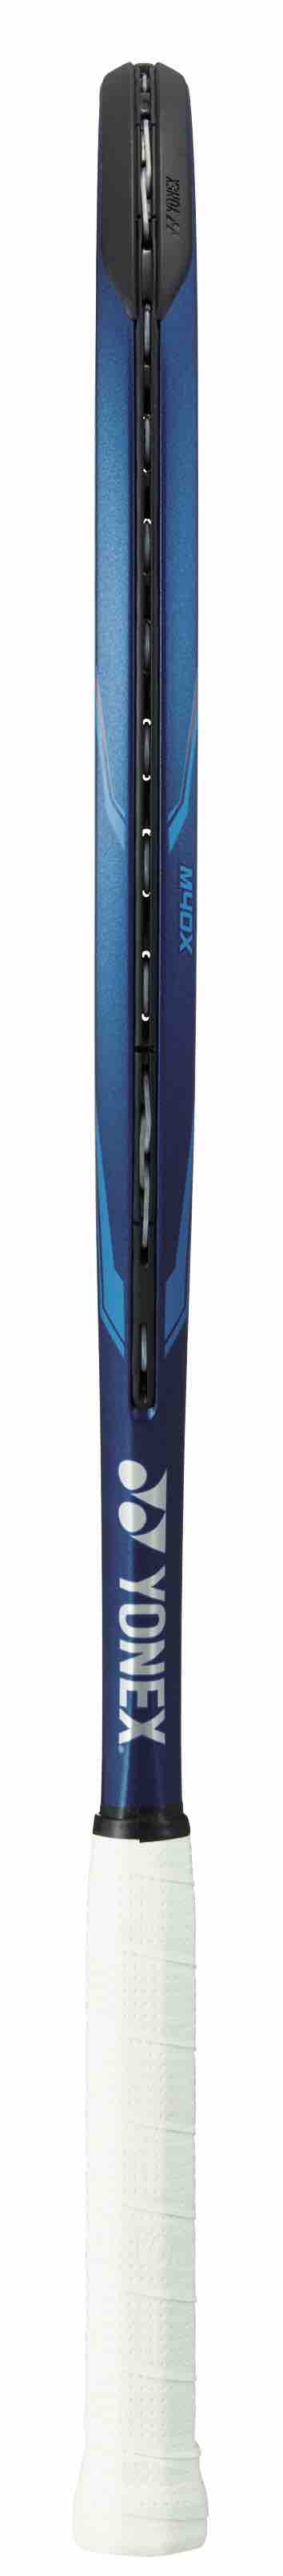 Yonex 2020 Ezone 100L 285g 4 1/8 Tennis Racquet - Deep Blue